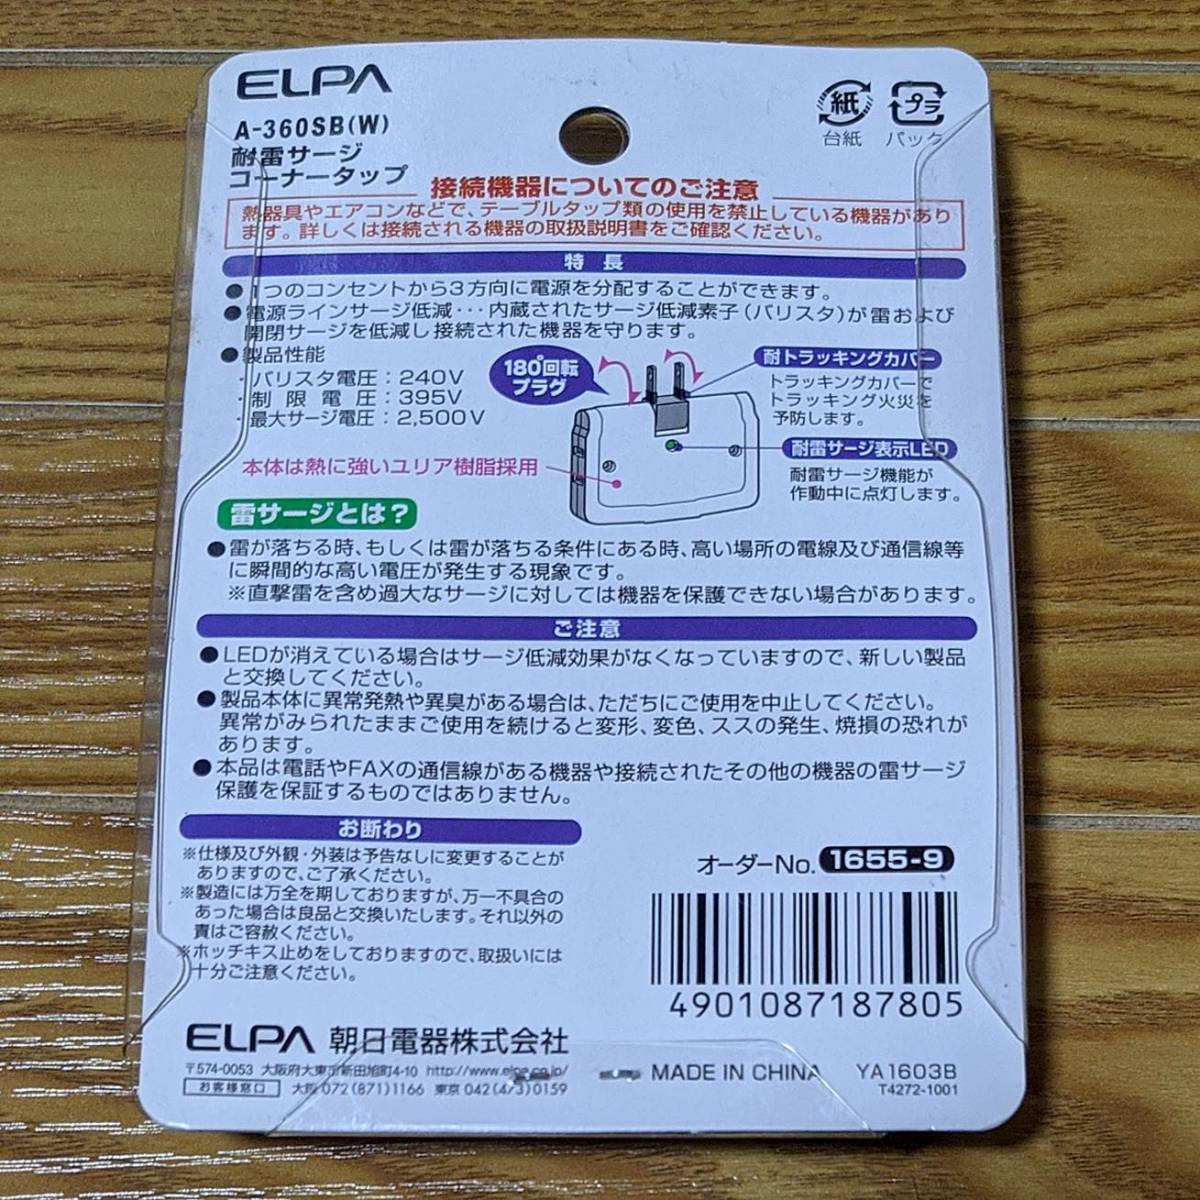  Elpa ELPA 3 выход A-360SB(W) молниезащита волна угол ответвление 1500W до утро день электро- контейнер 